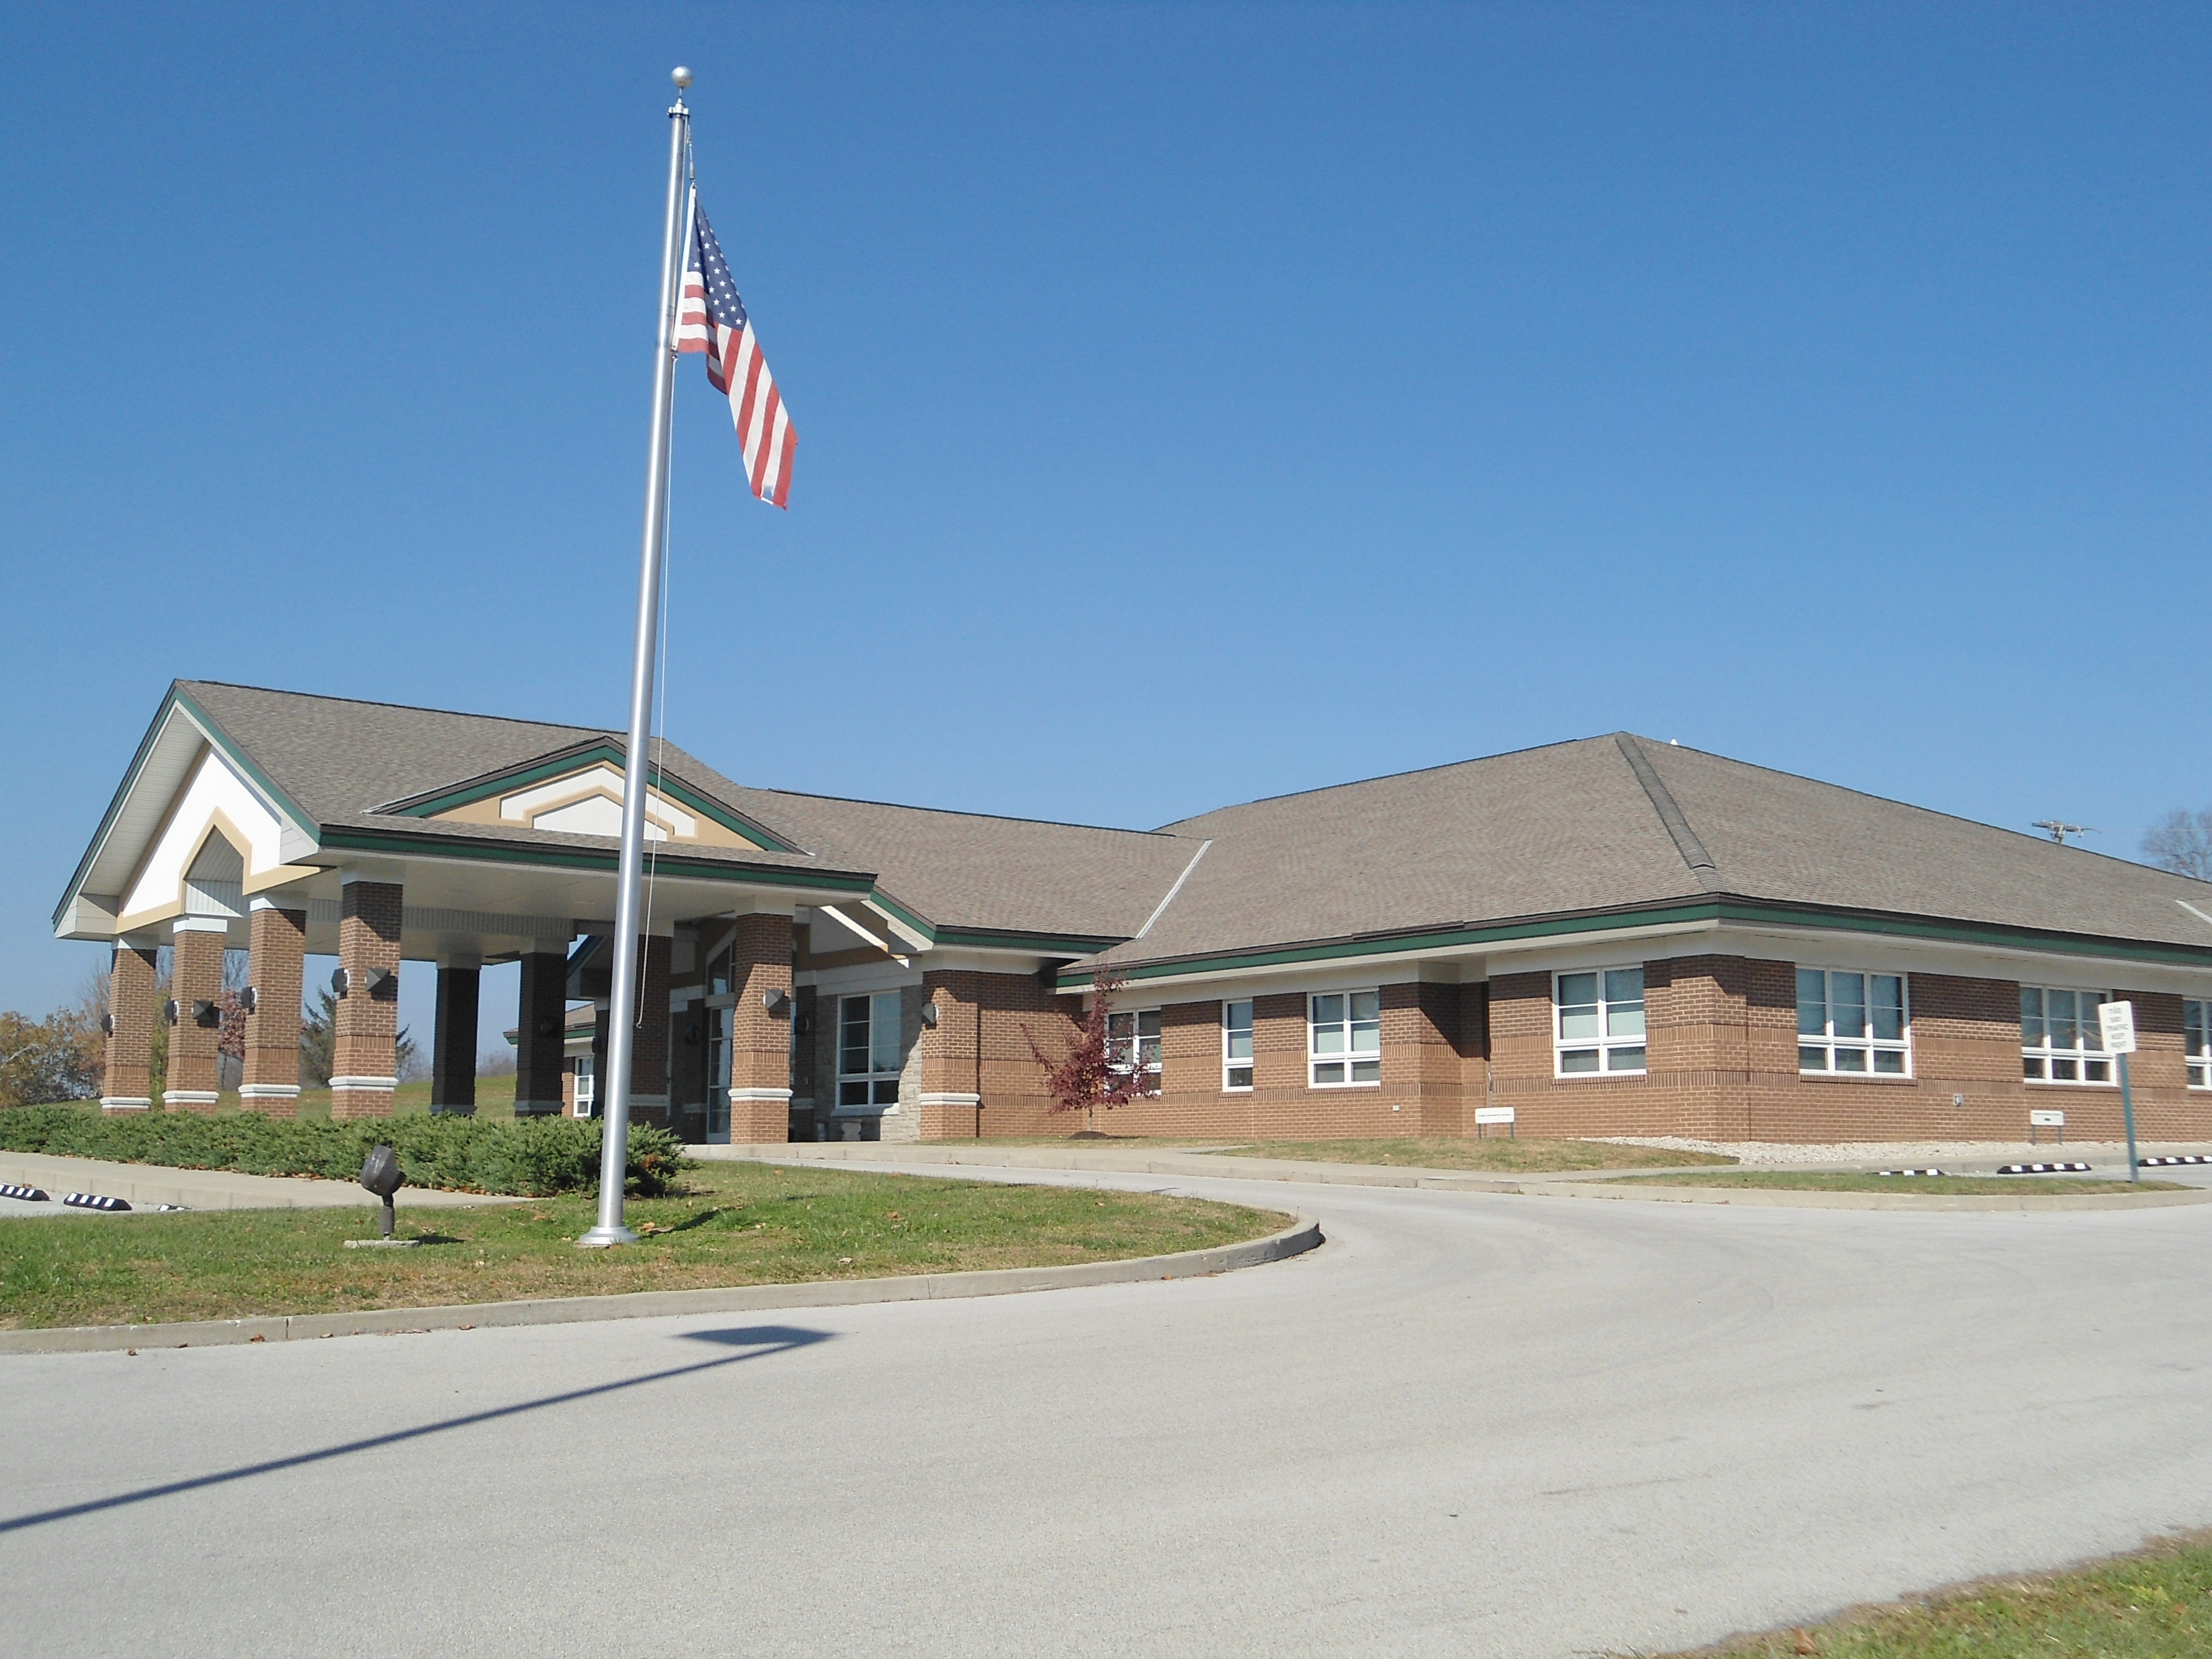 Bourbon County Health Department